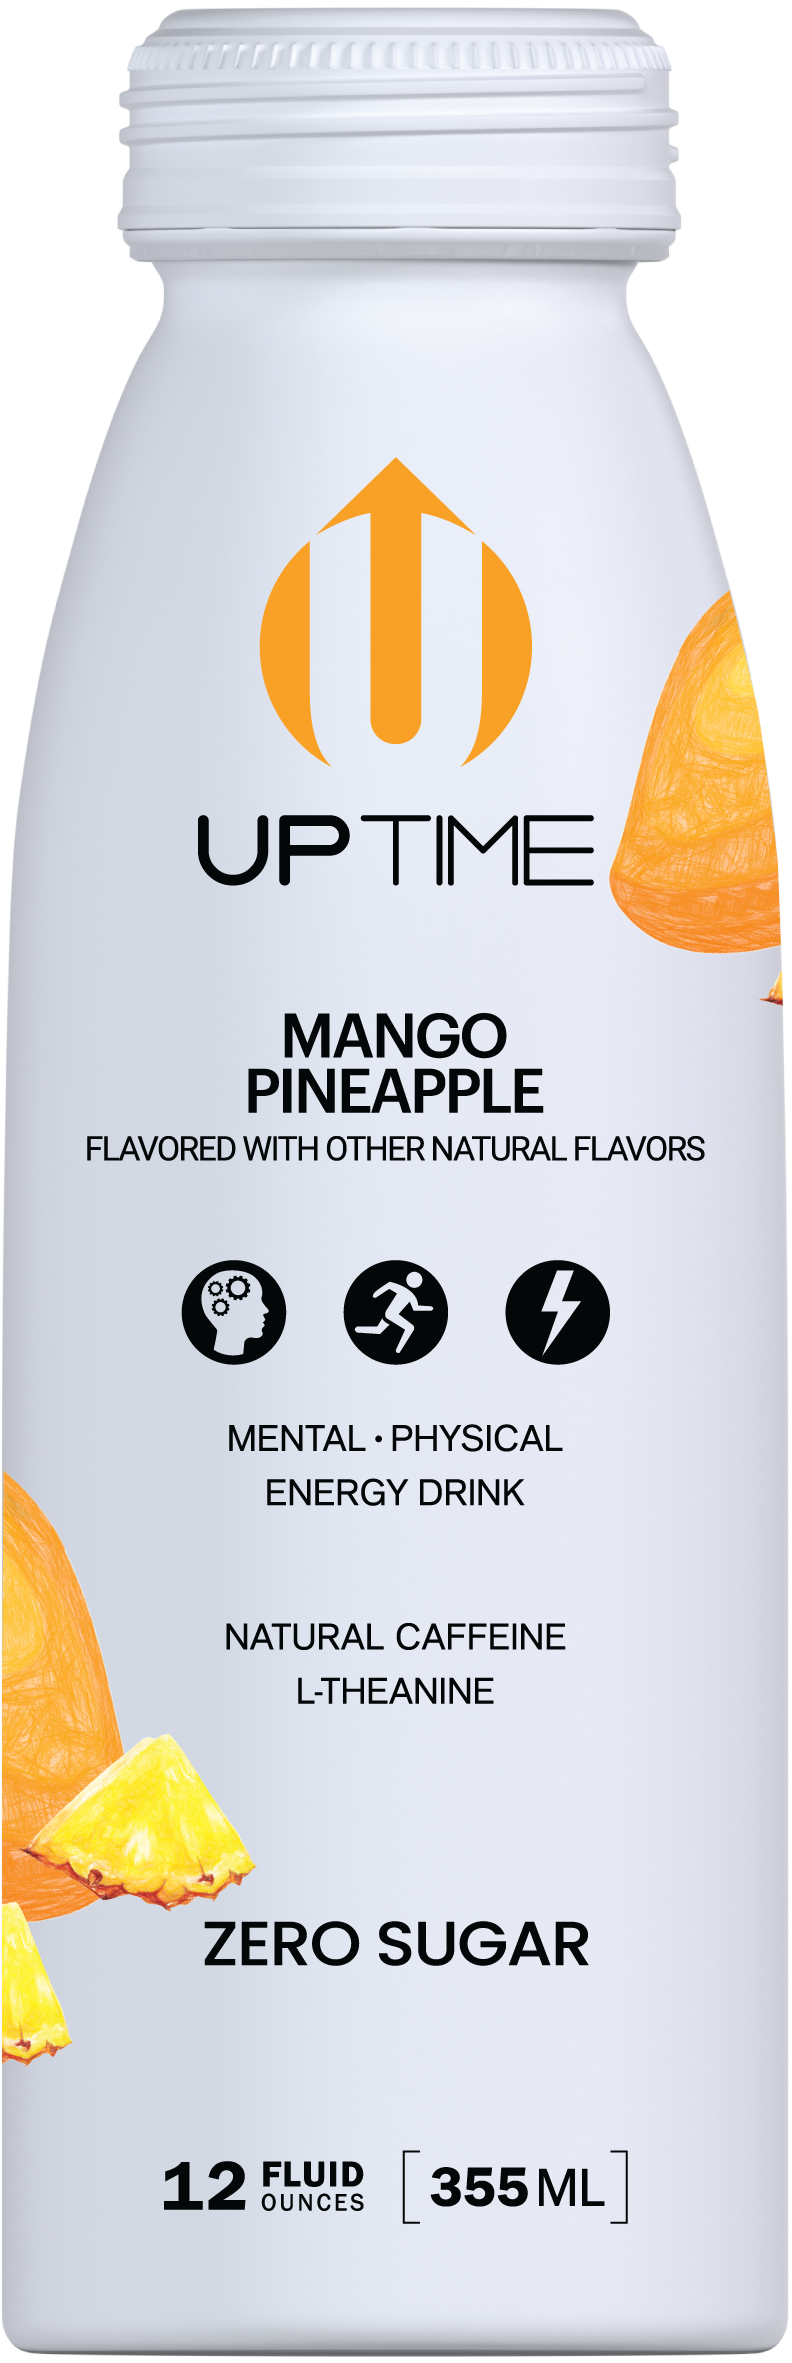 UPTIME Premium Energy Drink, Mango Pineapple - Sugar Free, 12oz Bottles (Pack of 12)